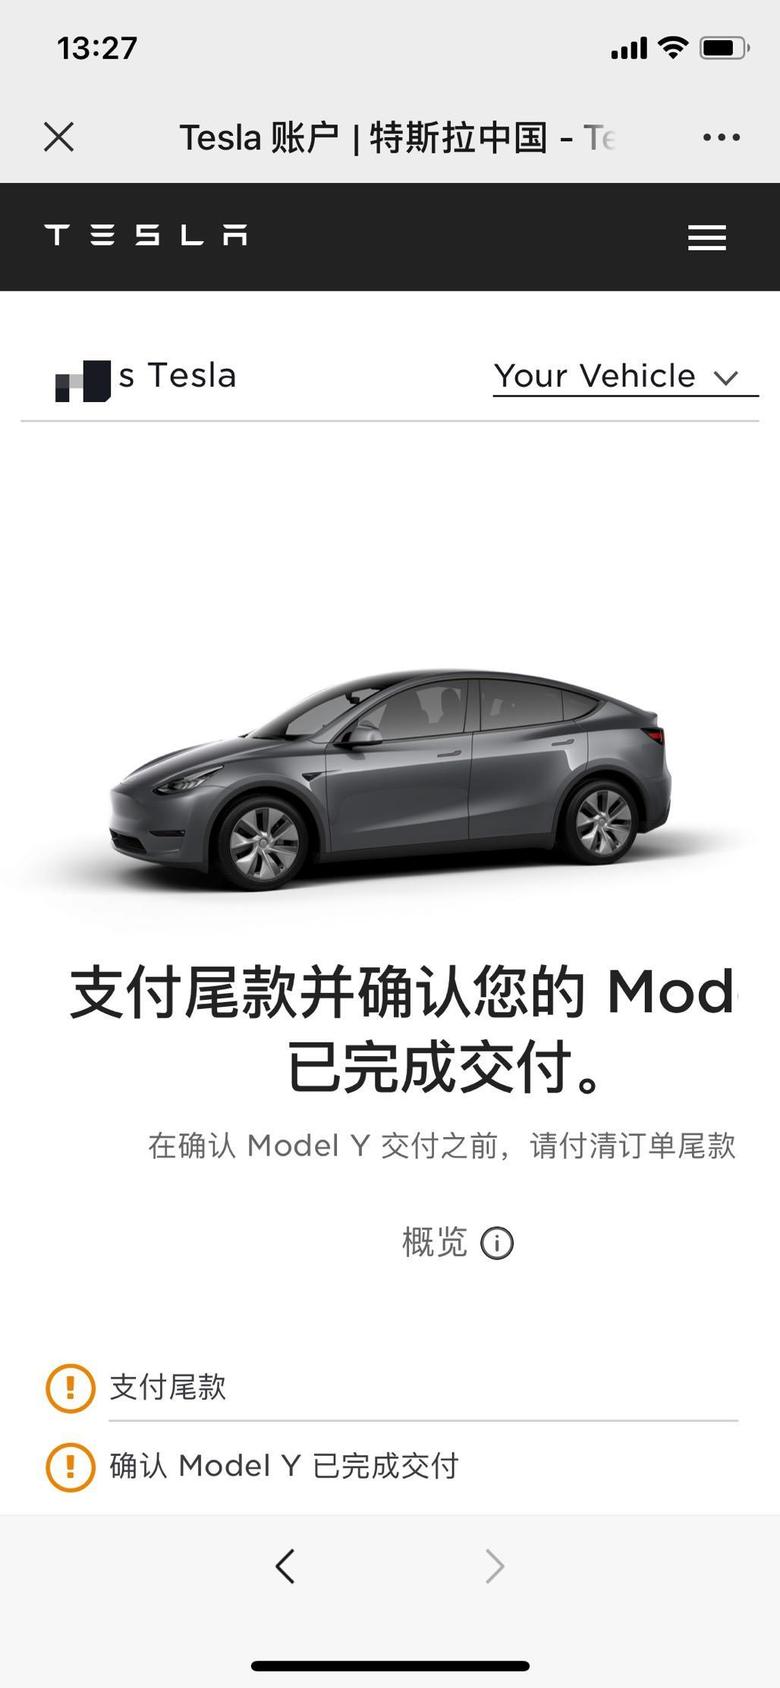 model y 定位上海，10号订单，本周六提车，给大家参考下